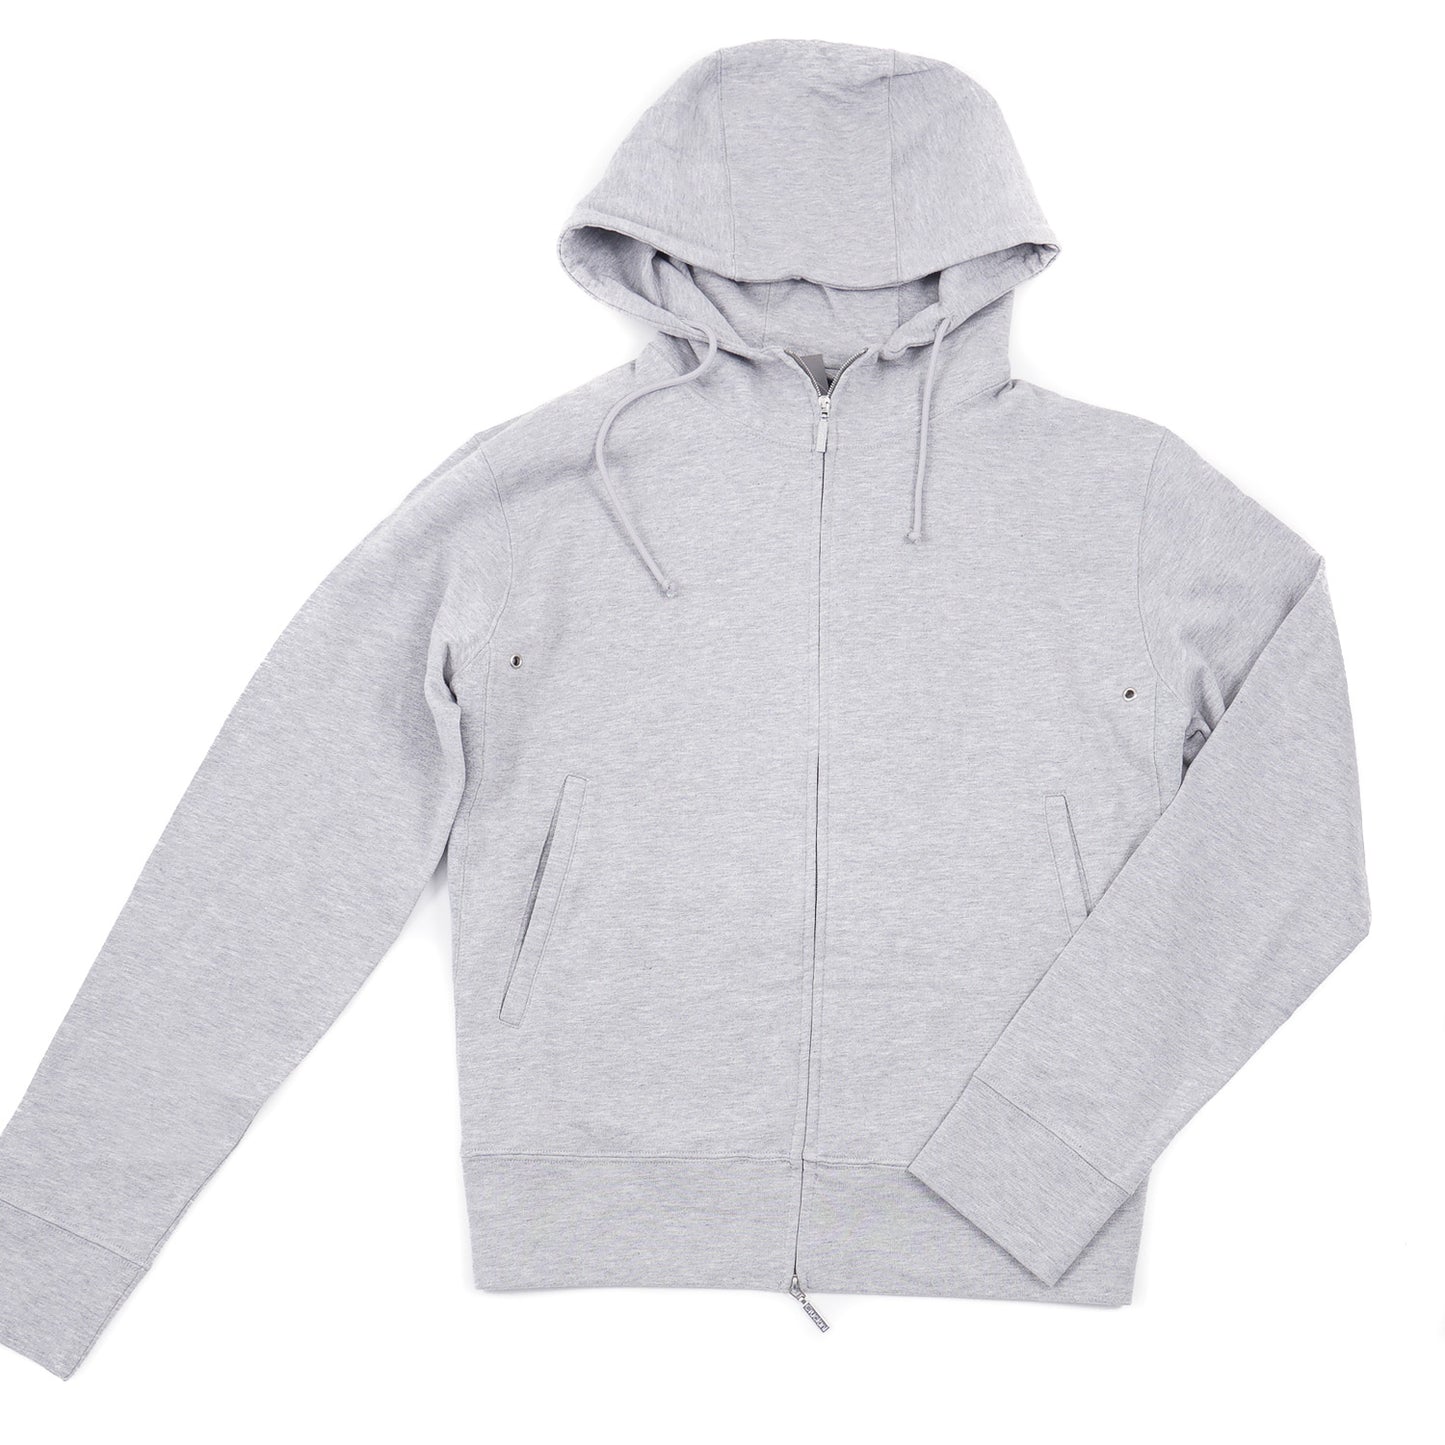 Cruciani Full-Zip Hooded Sweatshirt - Top Shelf Apparel